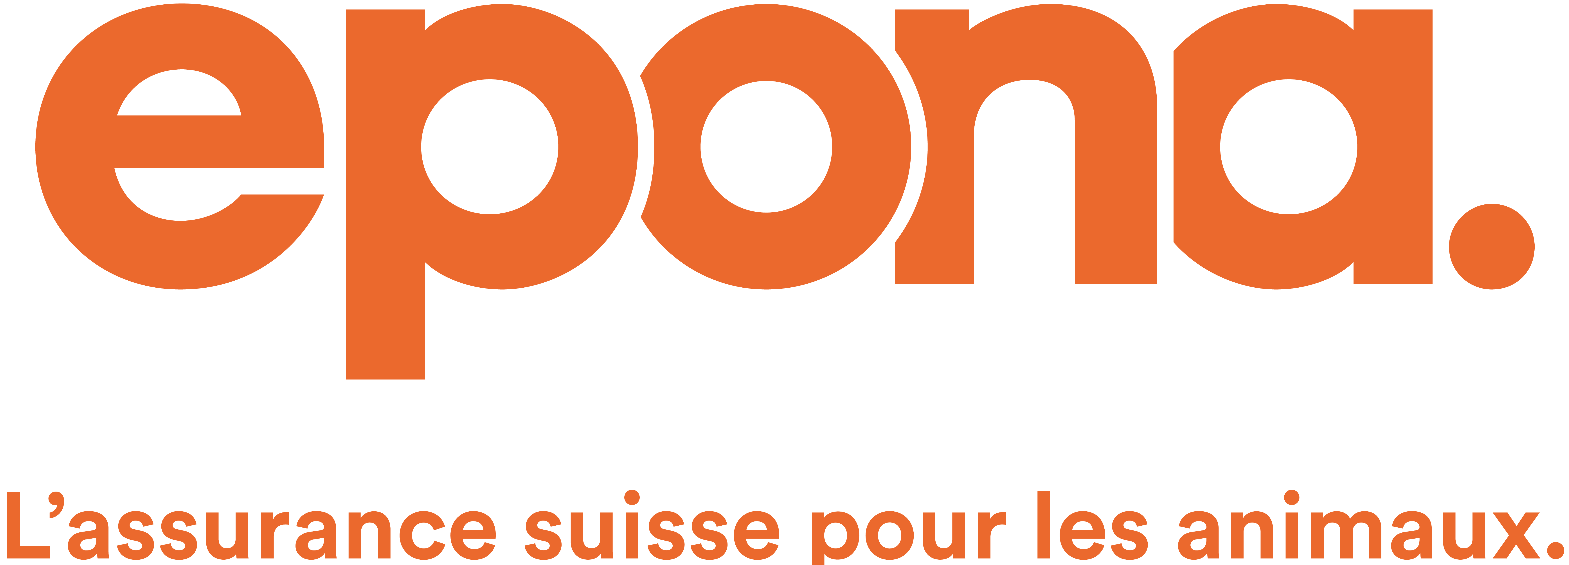 Logo Epona